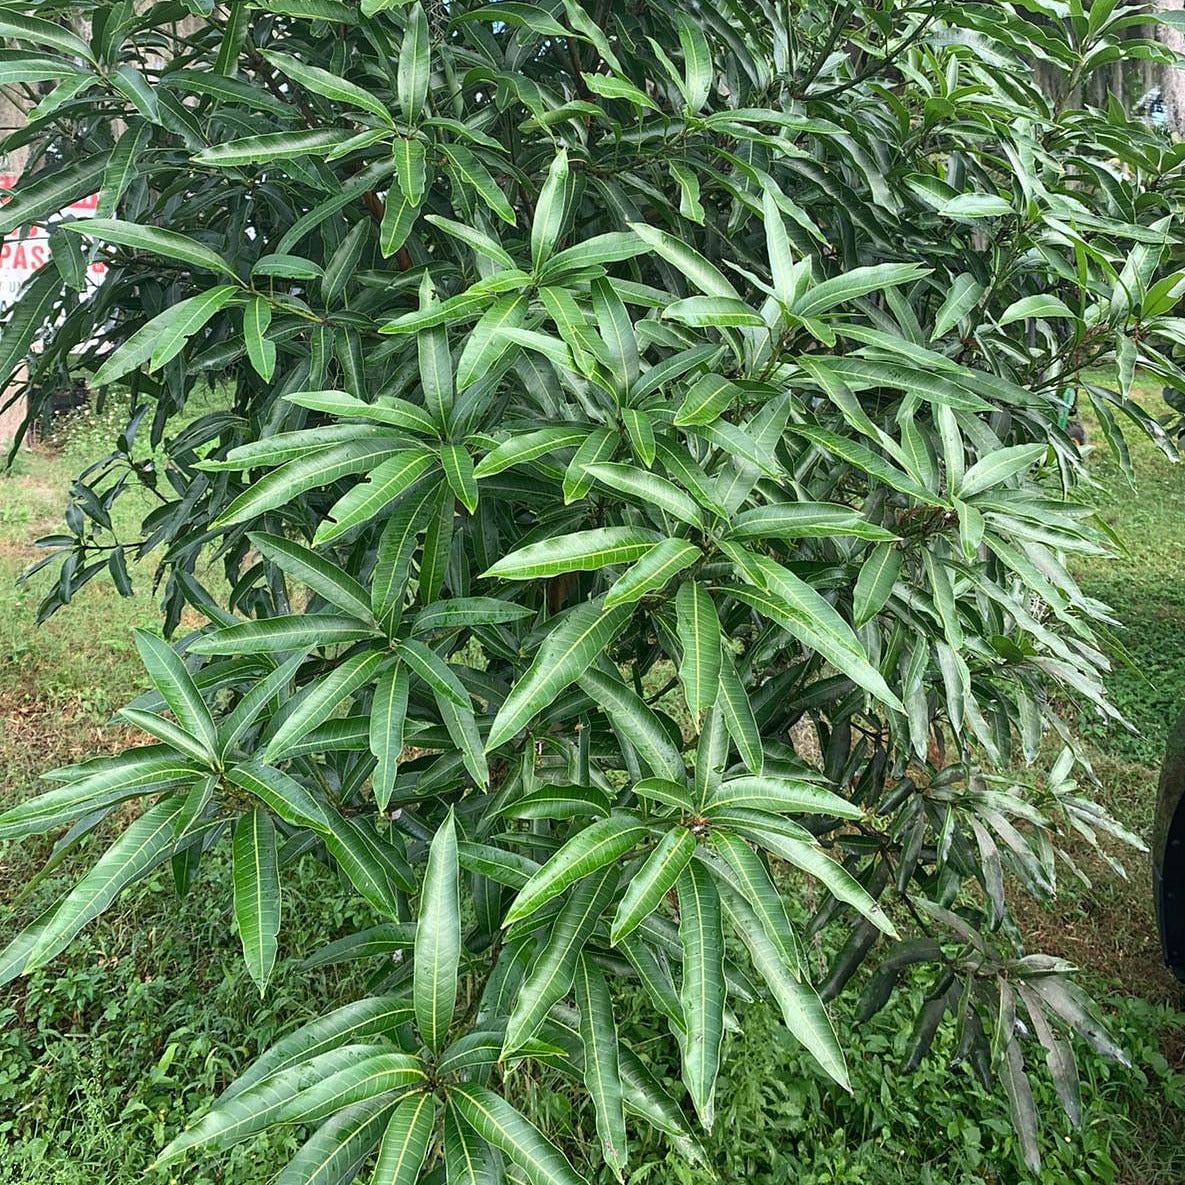 mango leaves